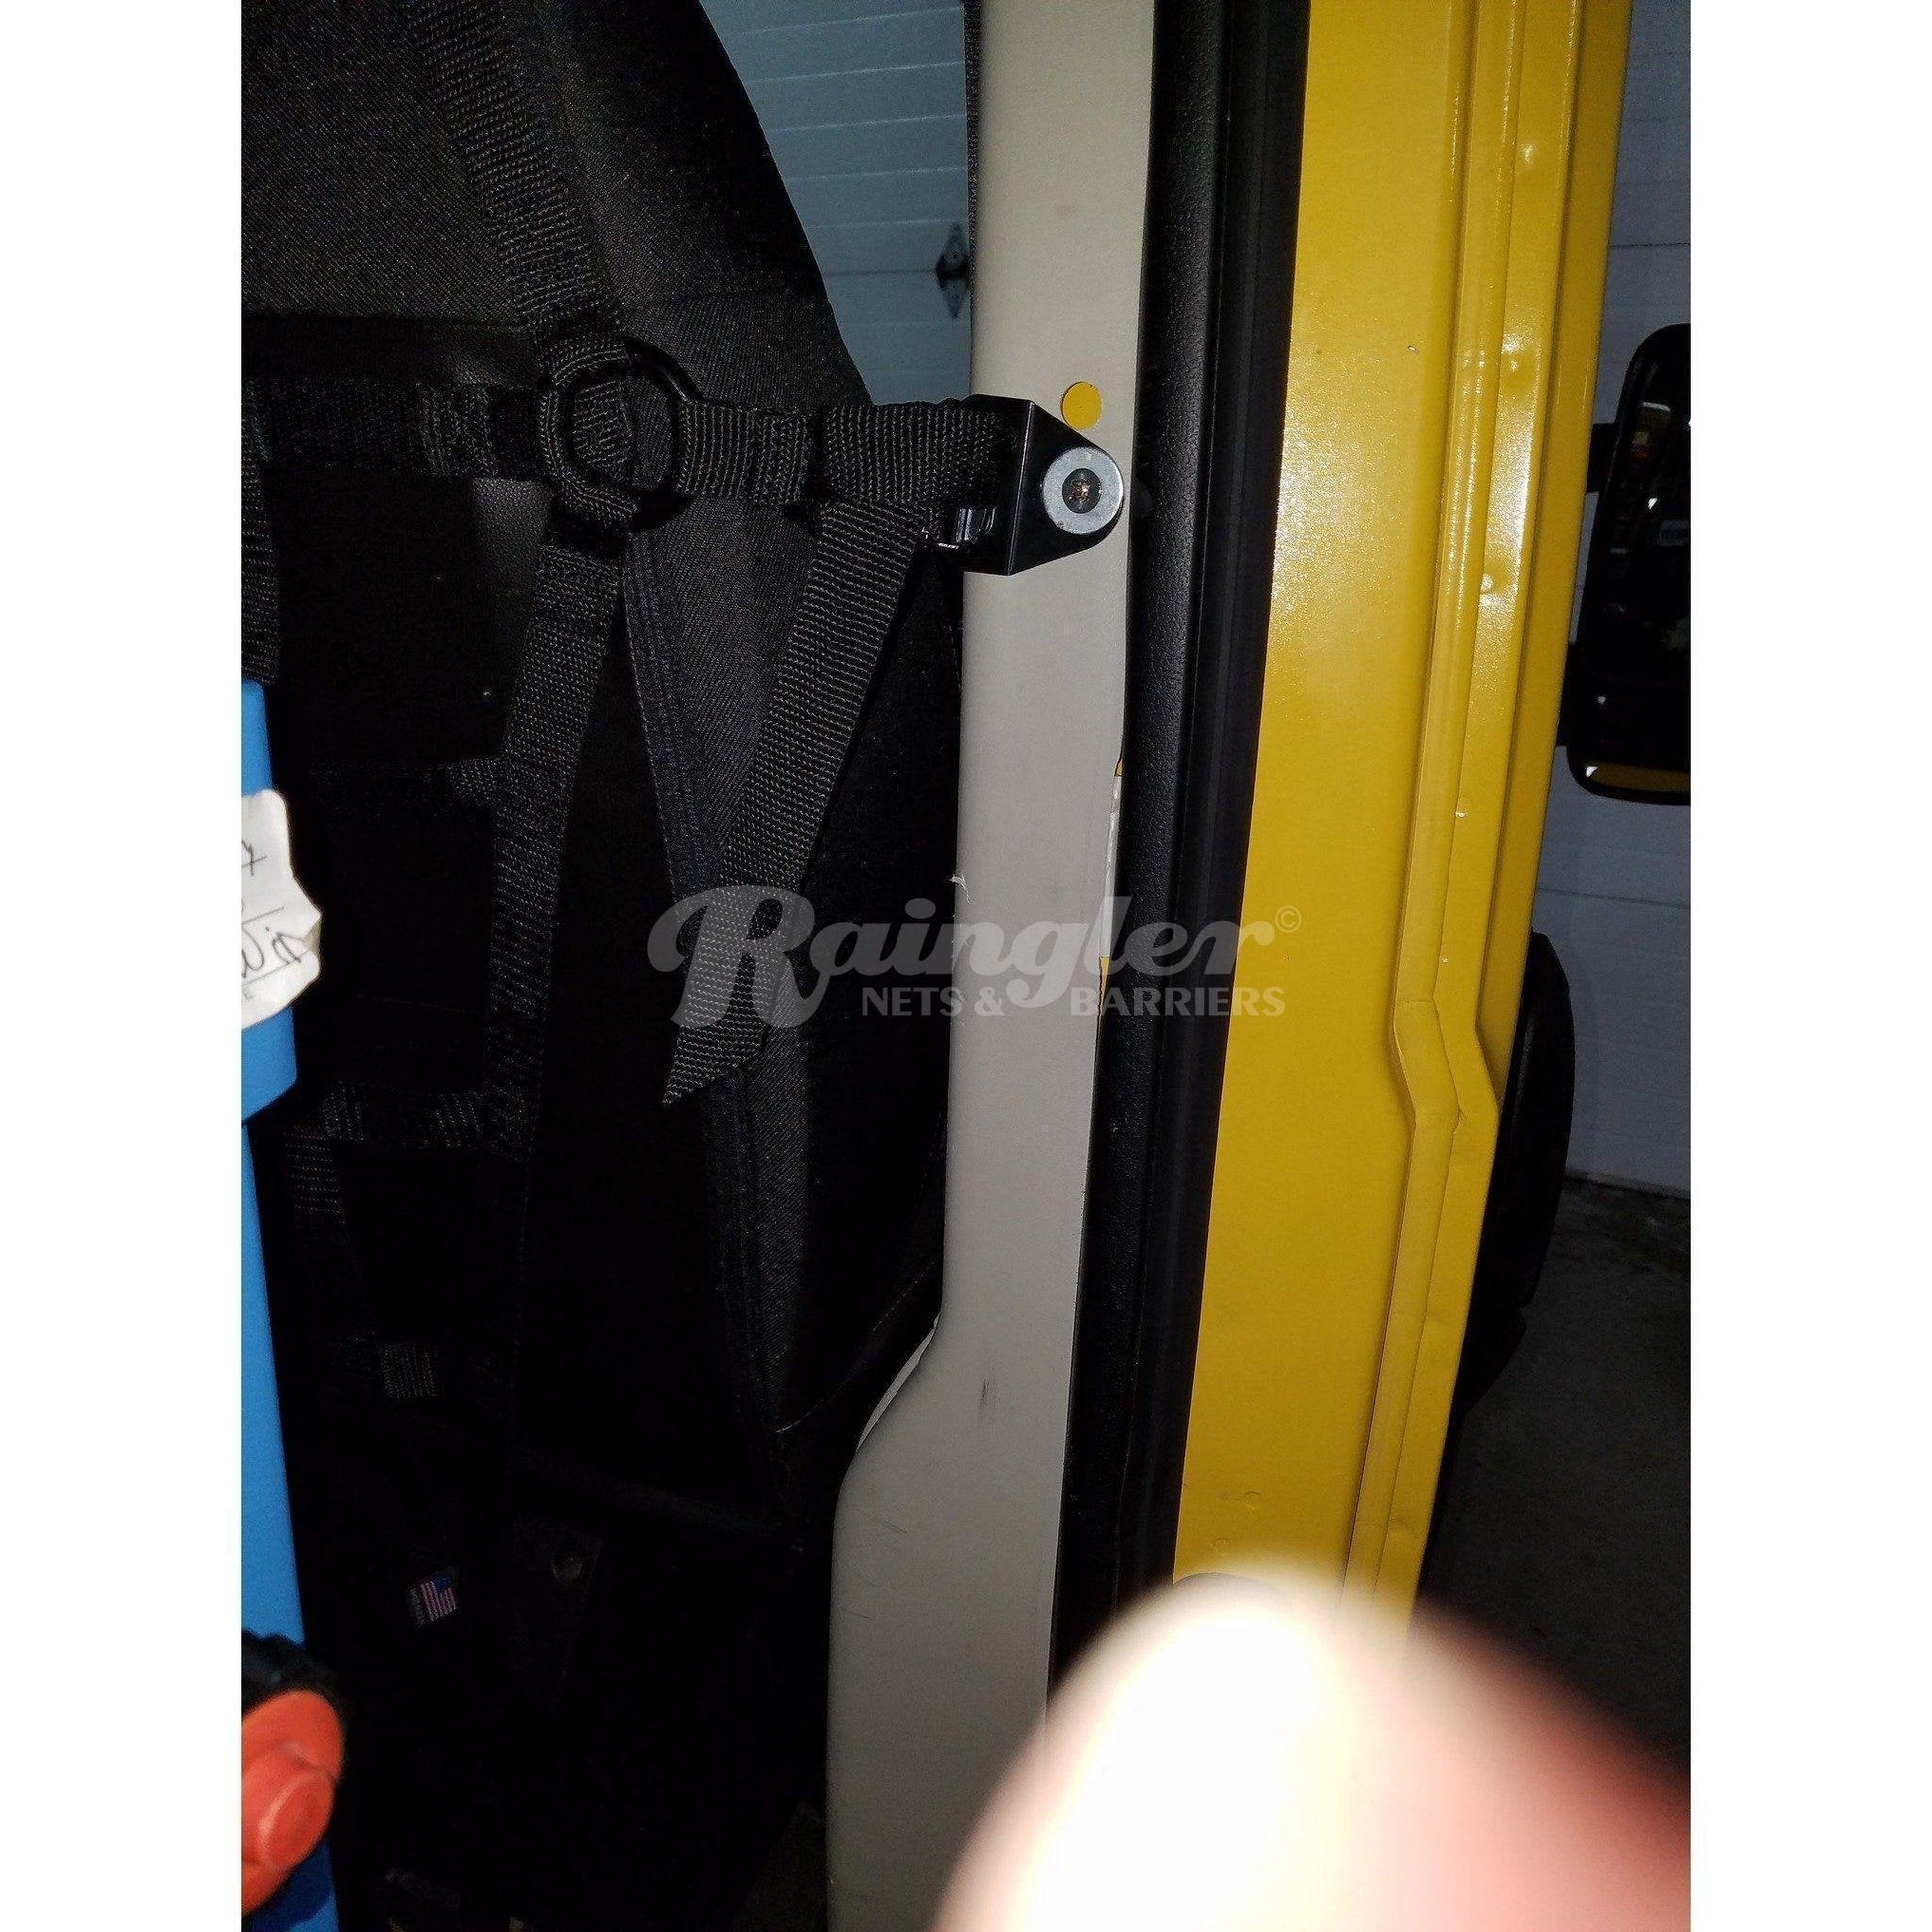 2015 - Newer Ram Pro Master City Van Behind Front Seats Barrier Divider Net